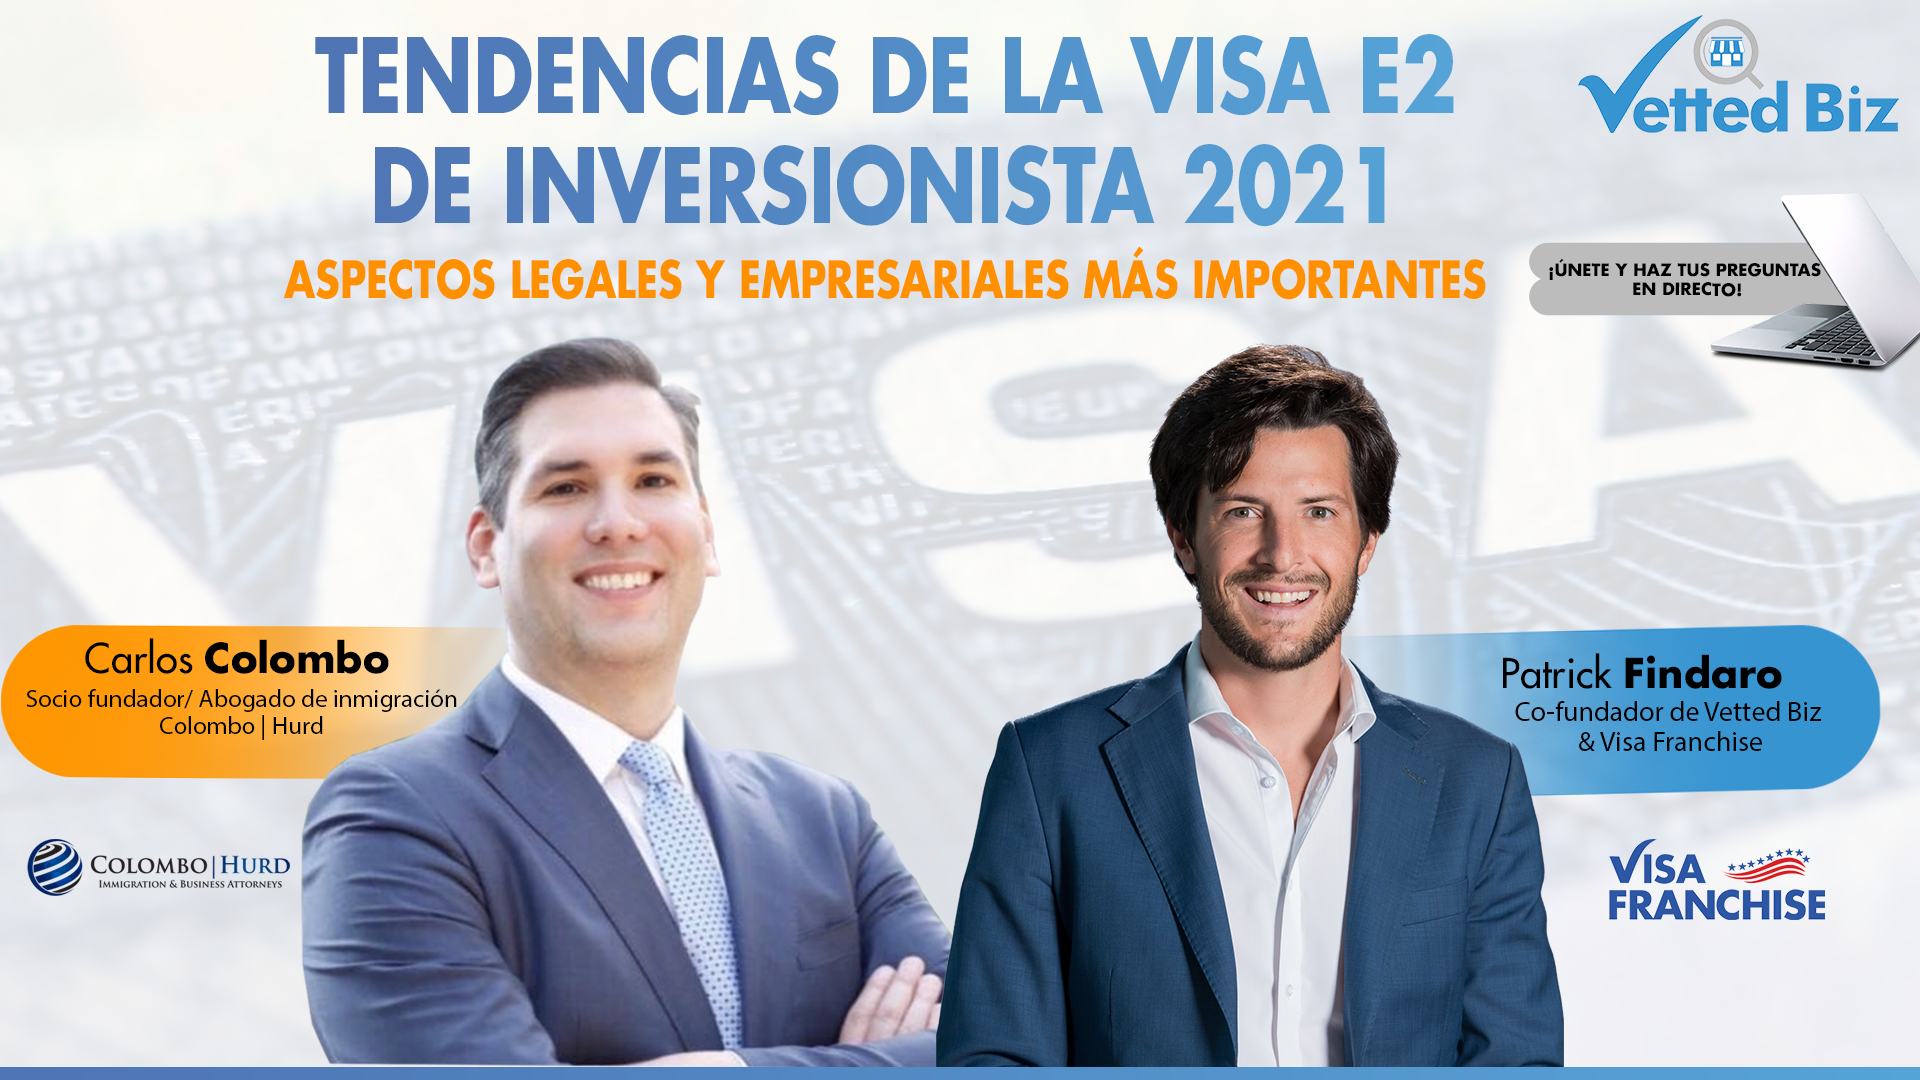 Flyer - E-2 Investor Visa Trends 2021 - ESP 